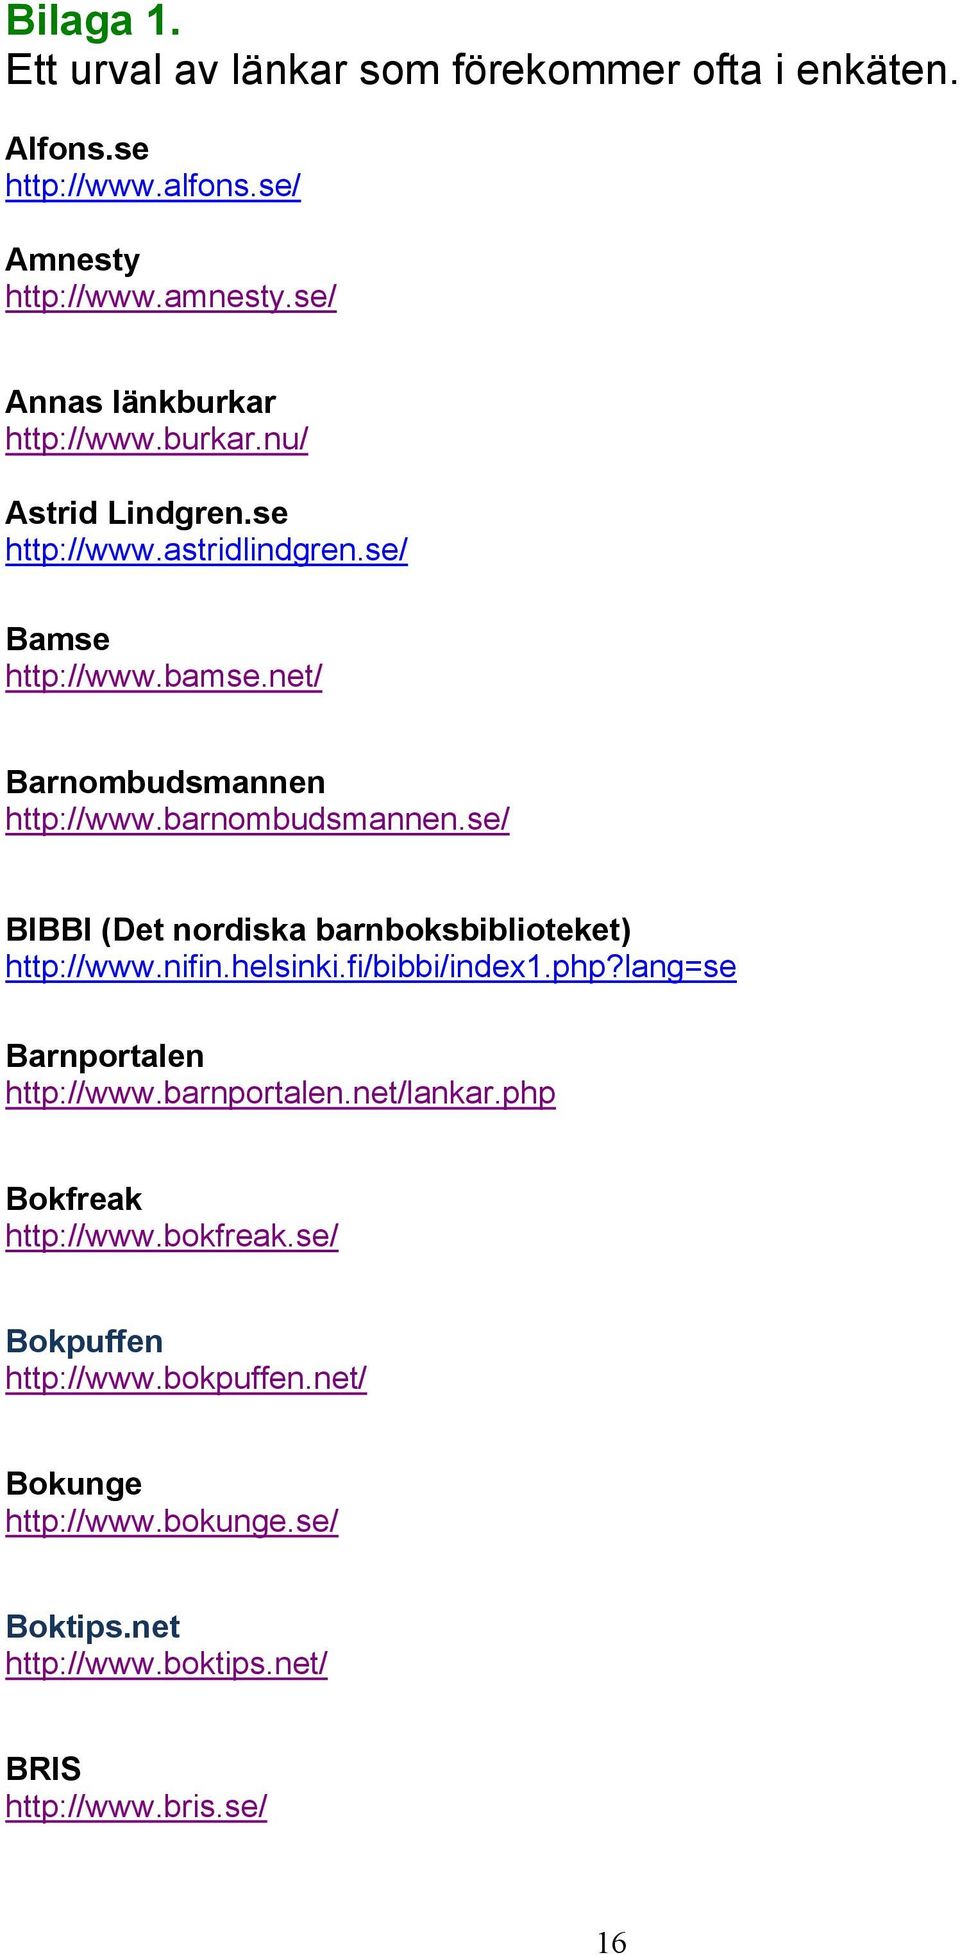 barnombudsmannen.se/ BIBBI (Det nordiska barnboksbiblioteket) http://www.nifin.helsinki.fi/bibbi/index1.php?lang=se Barnportalen http://www.